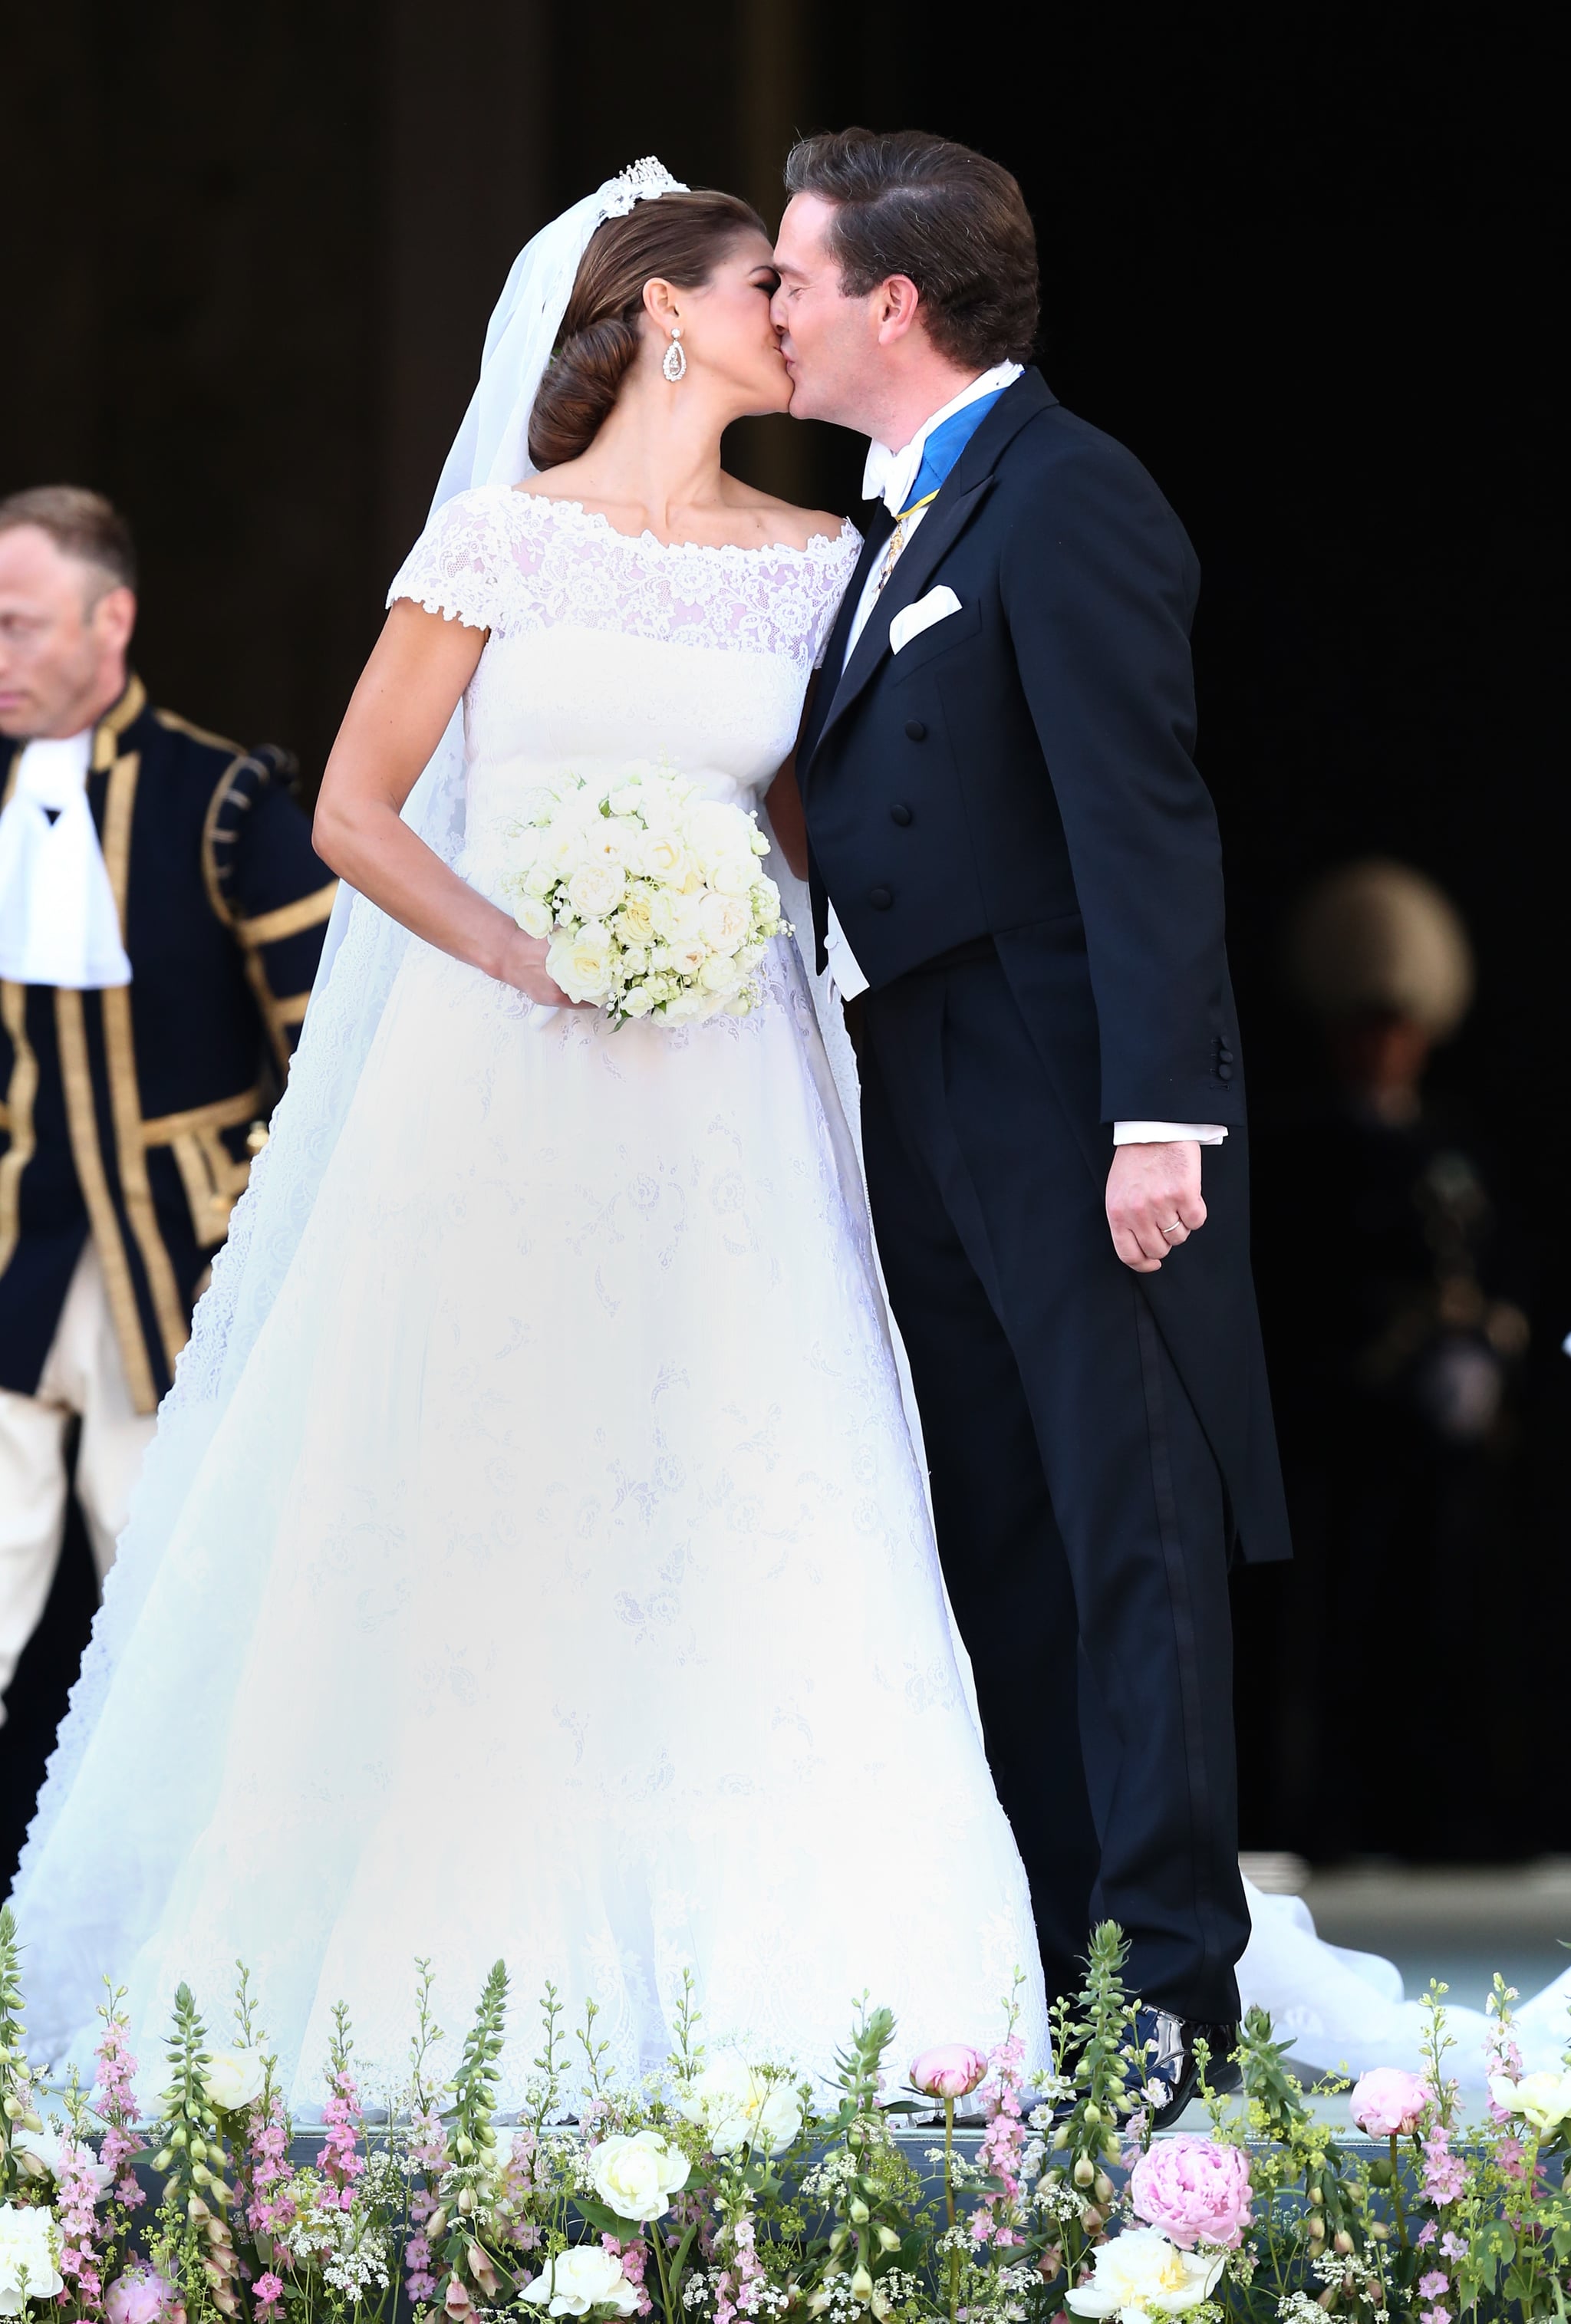 Wedding of Princess Madeleine of Sweden and Christopher O'Neill